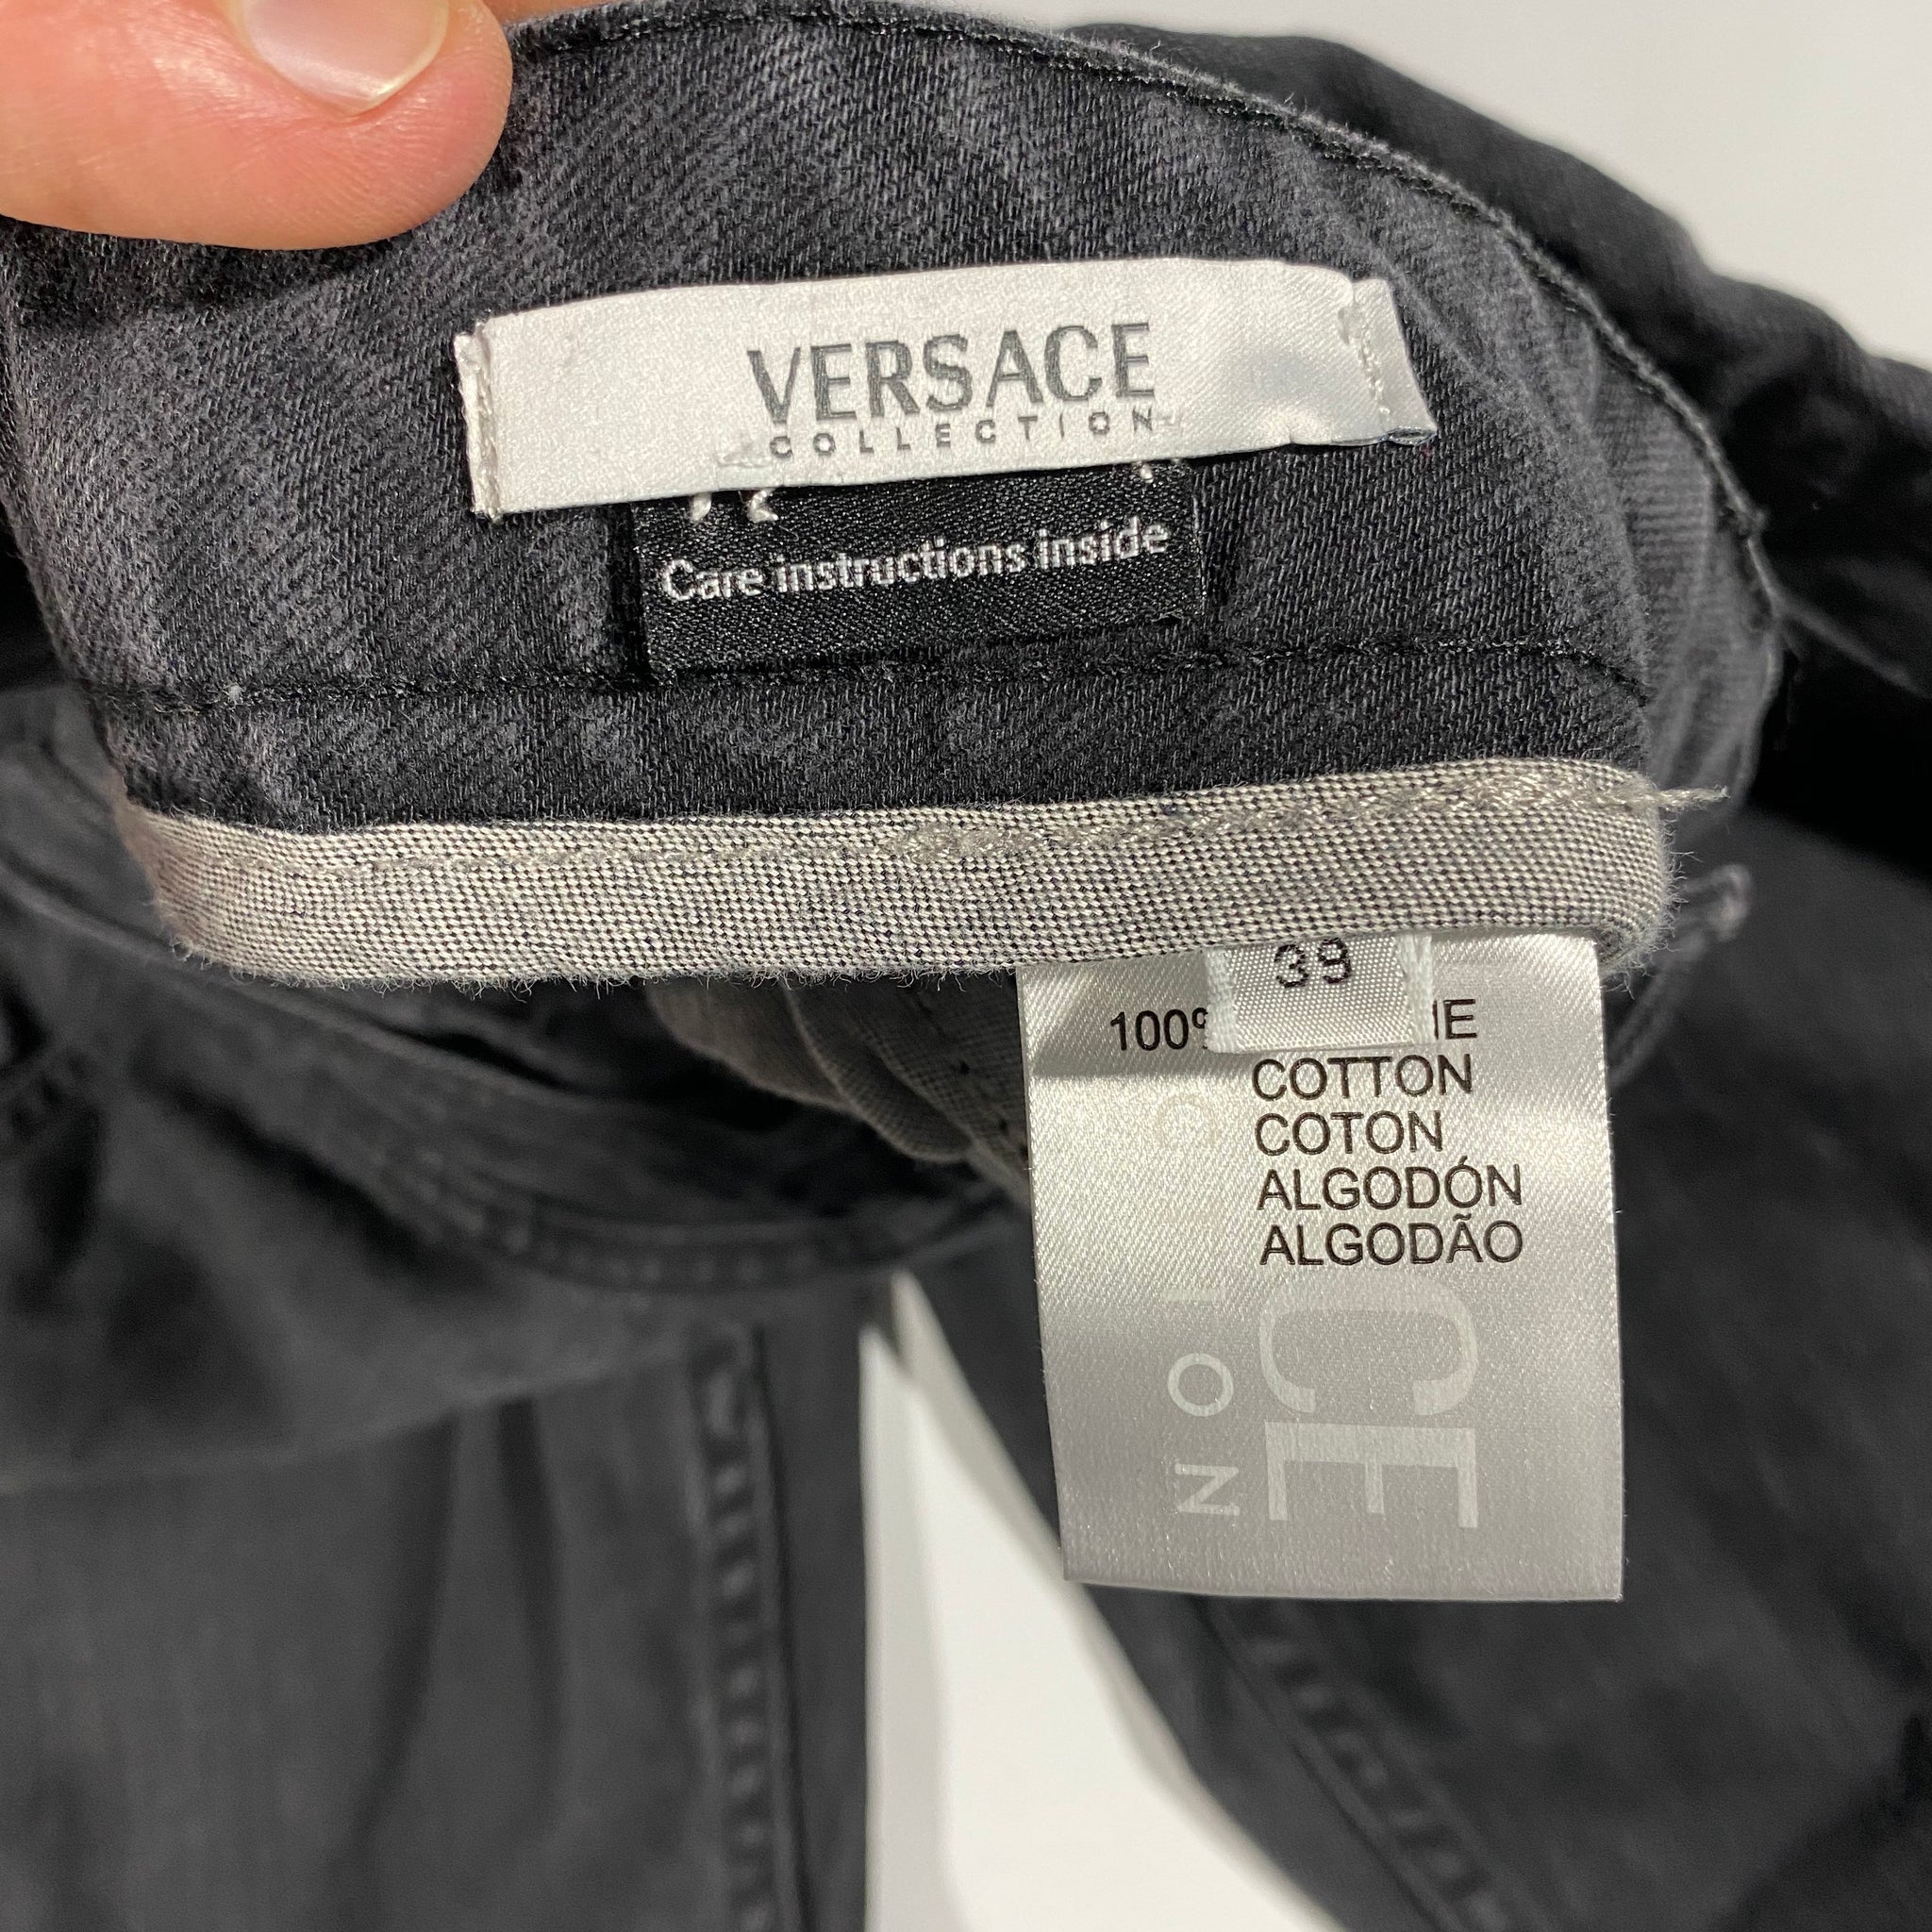 Versace jeans. 38/33